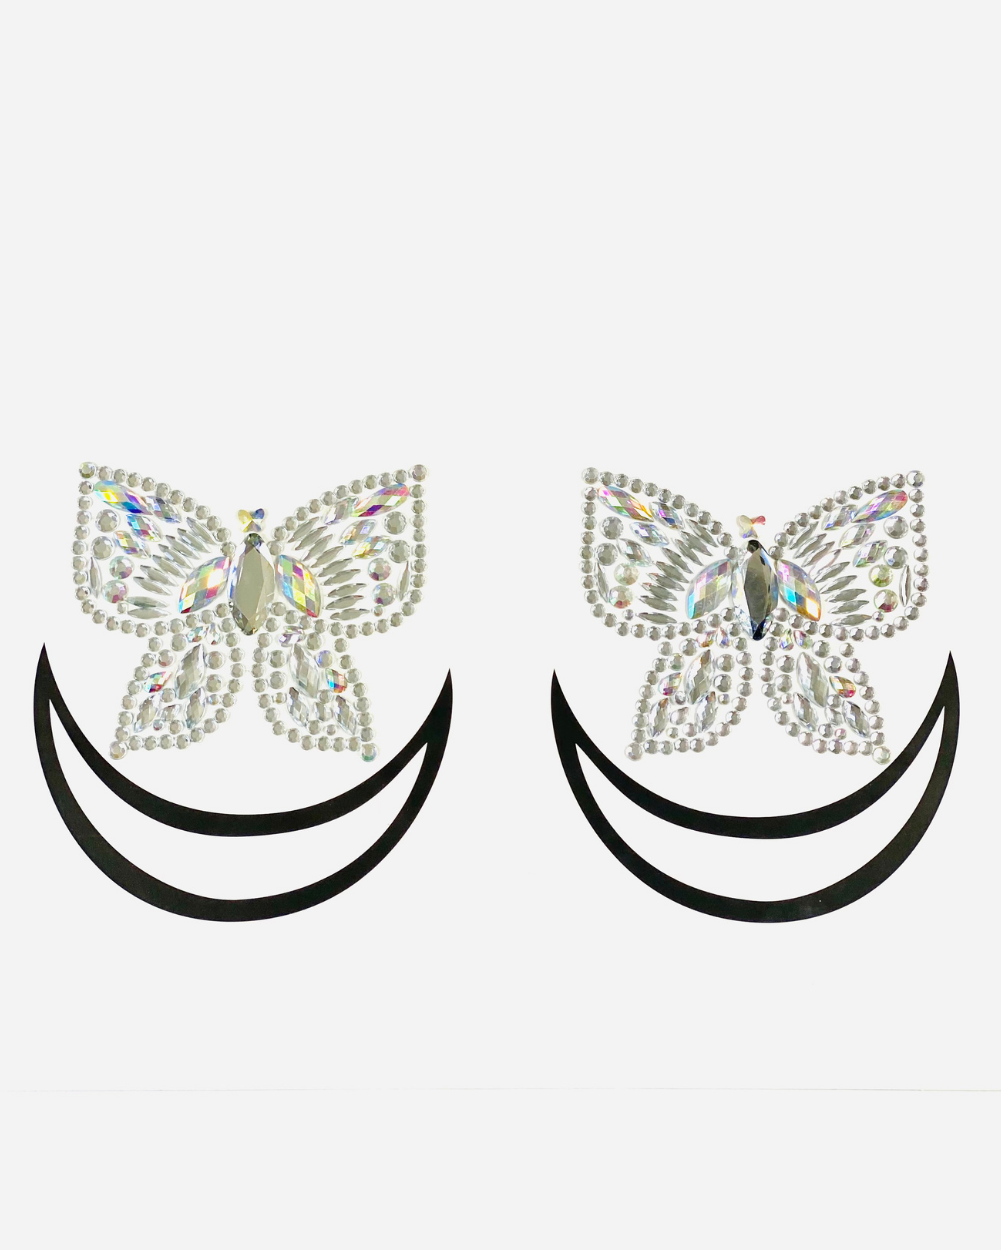 Social Butterfly Jewel Body Stickers - Lunautics Jewel Pasties